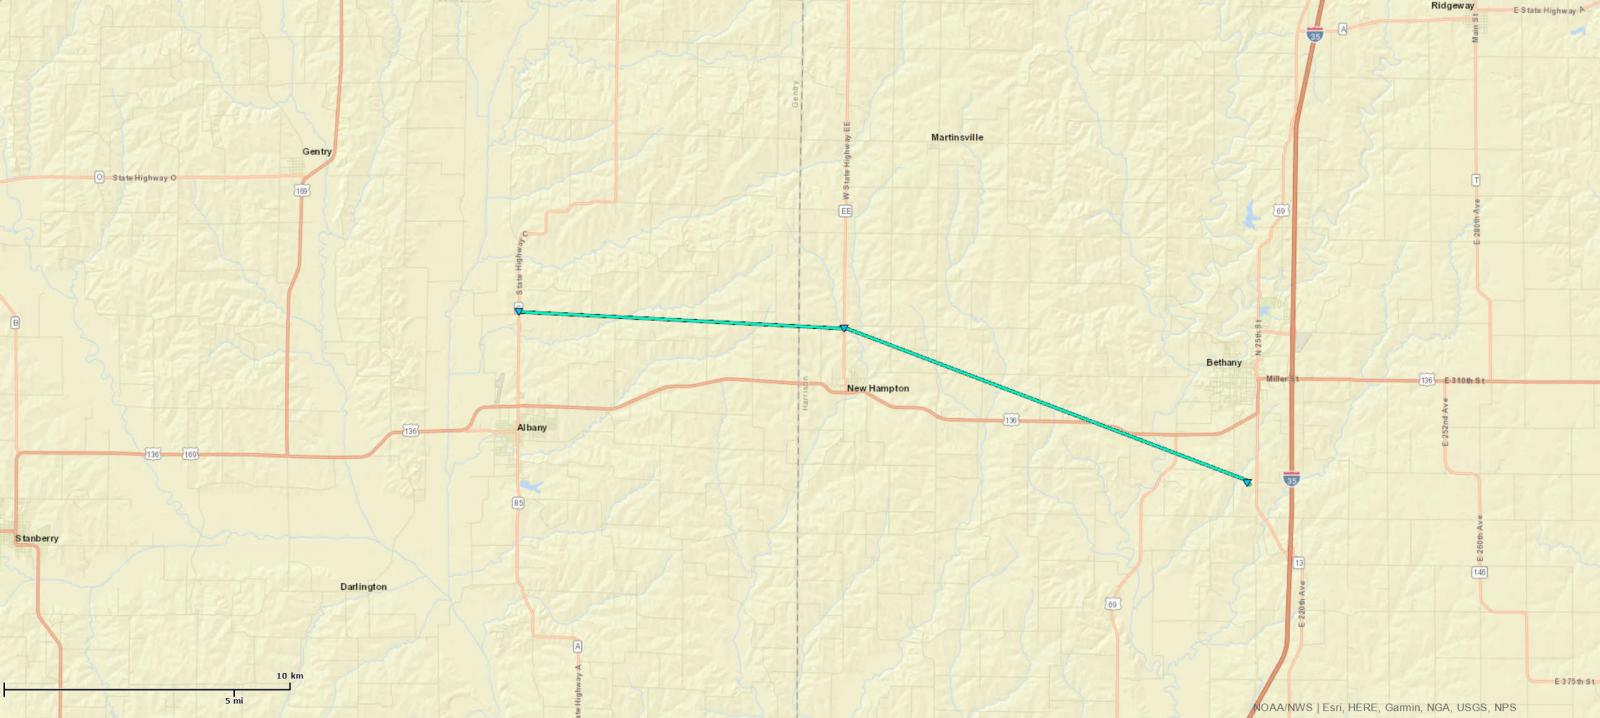 Gentry-Harrison County Tornado Track Map